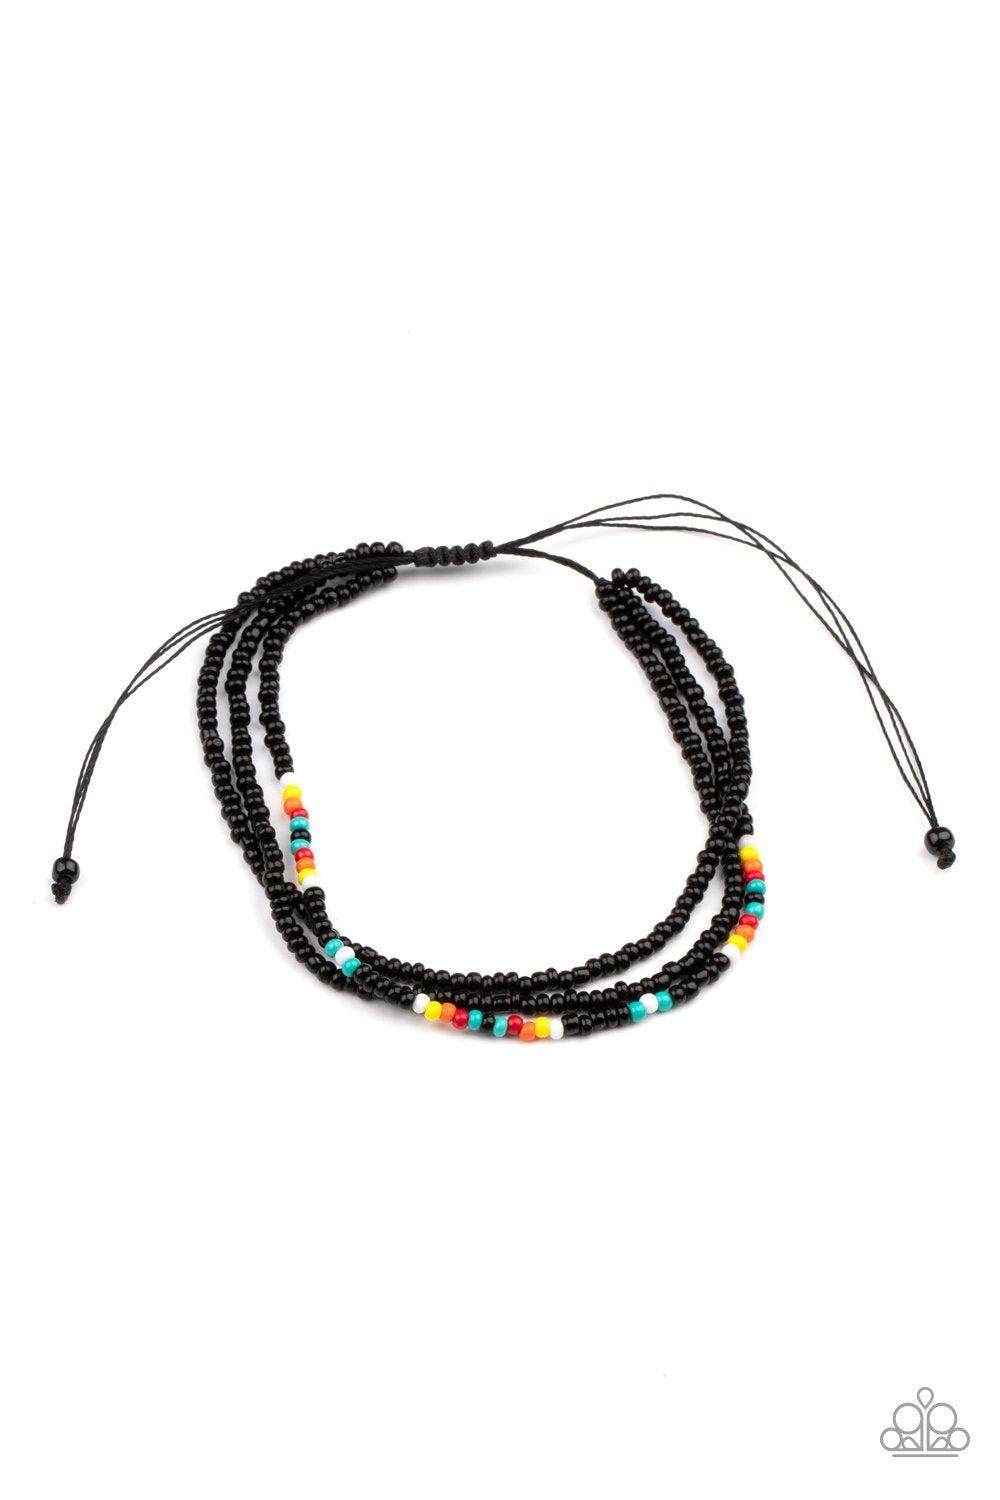 Basecamp Boyfriend Black & Multi Seed Bead Sliding Knot Bracelet - Paparazzi Accessories- lightbox - CarasShop.com - $5 Jewelry by Cara Jewels